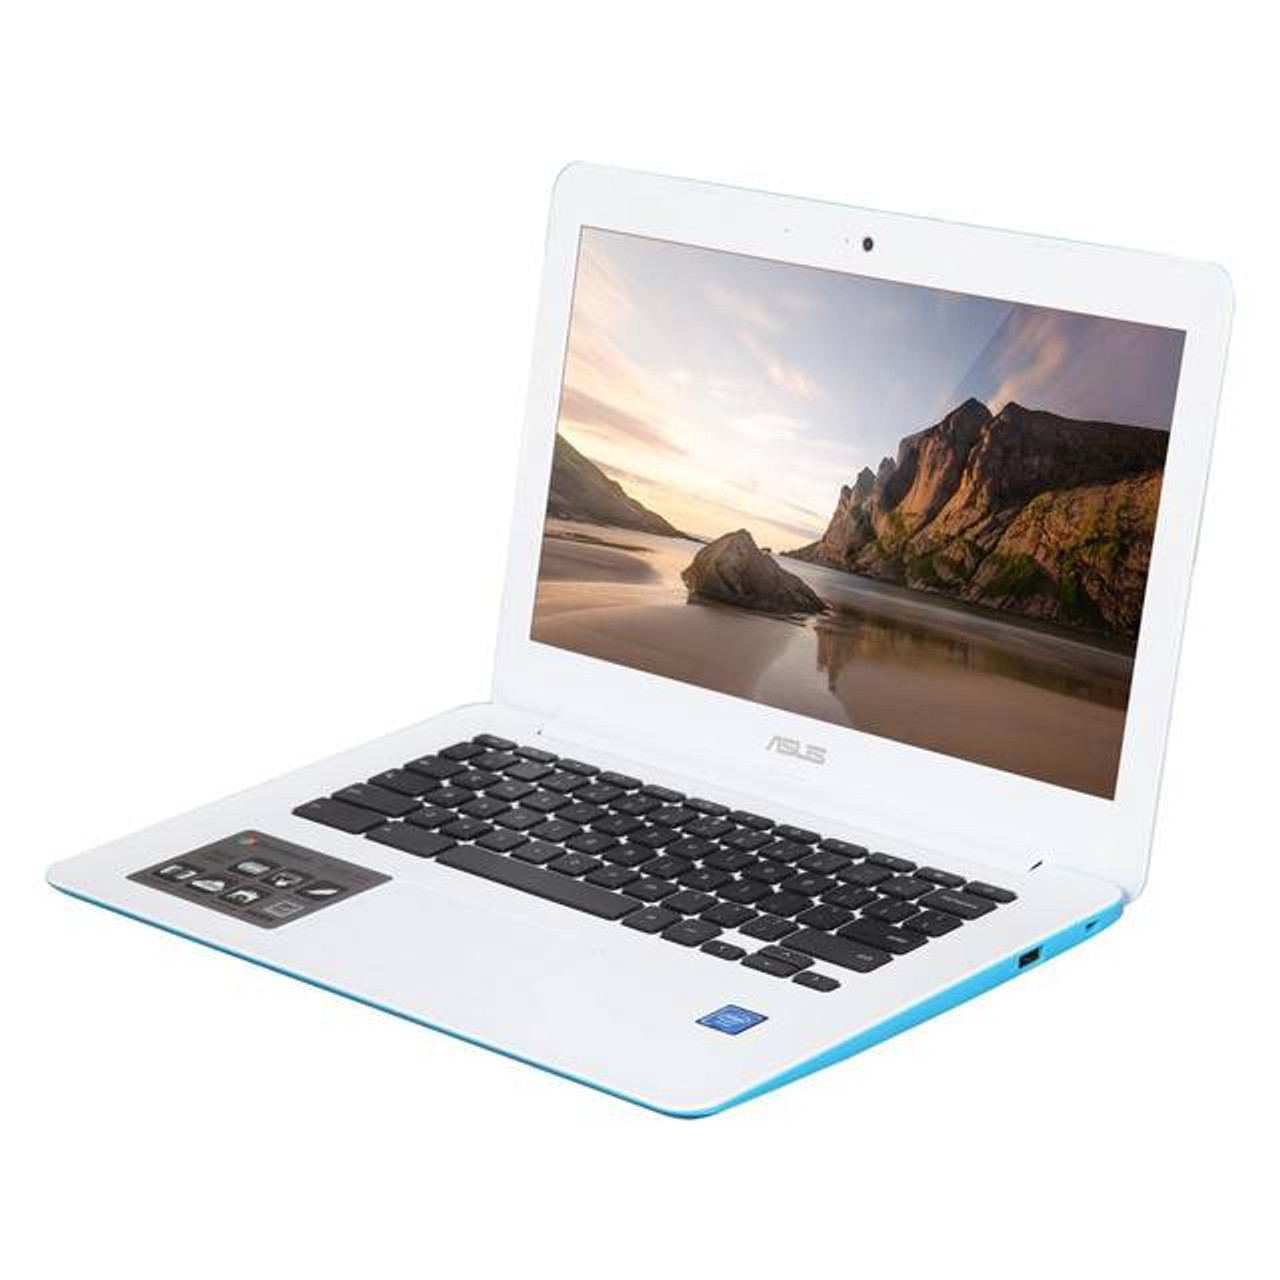 ASUS Chromebook C300SA-DH02-LB 13.3 inch Intel Celeron N3060 1.6GHz/ 4GB LPDDR3/ 16GB eMMC + TPM/ USB3.0/ Chrome Notebook (Light Blue)